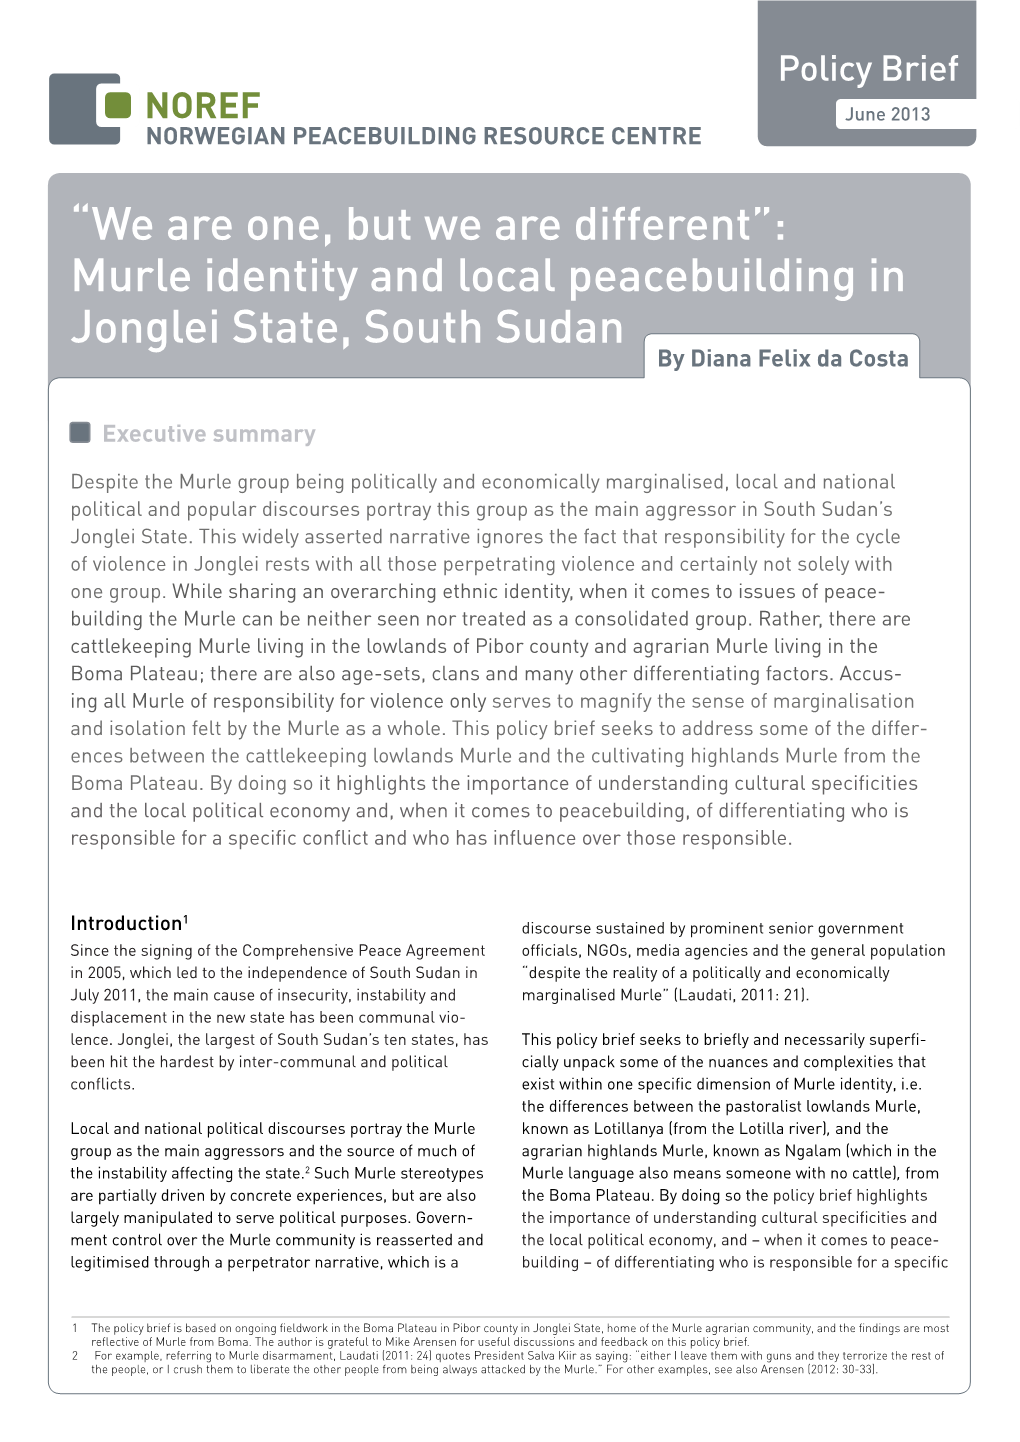 Murle Identity and Local Peacebuilding in Jonglei State, South Sudan by Diana Felix Da Costa